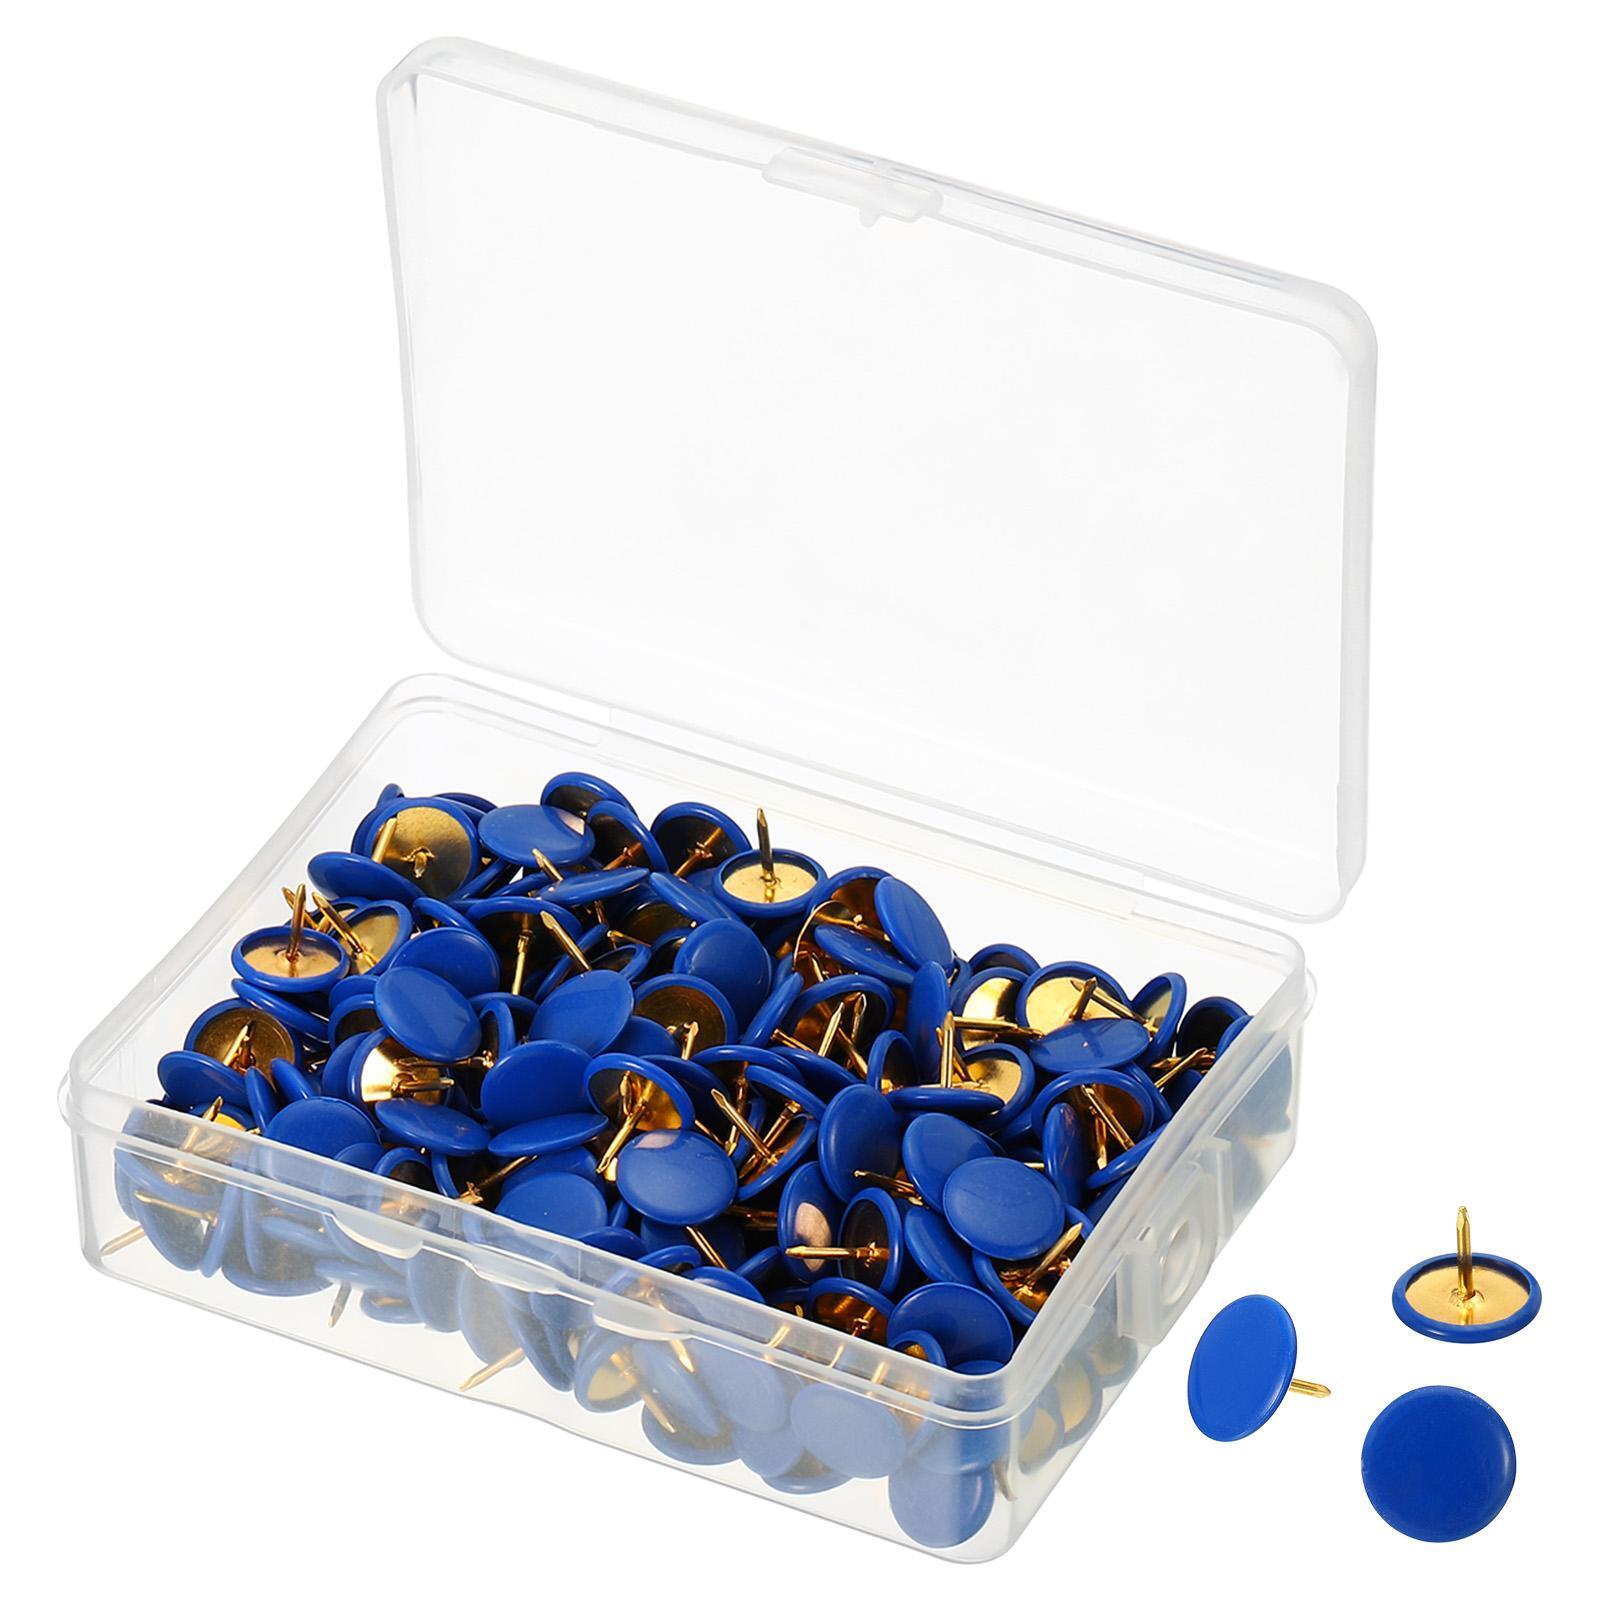 300pcs Push Pins, Plastic Decorative Thumb Tacks Golden Steel Point, Blue